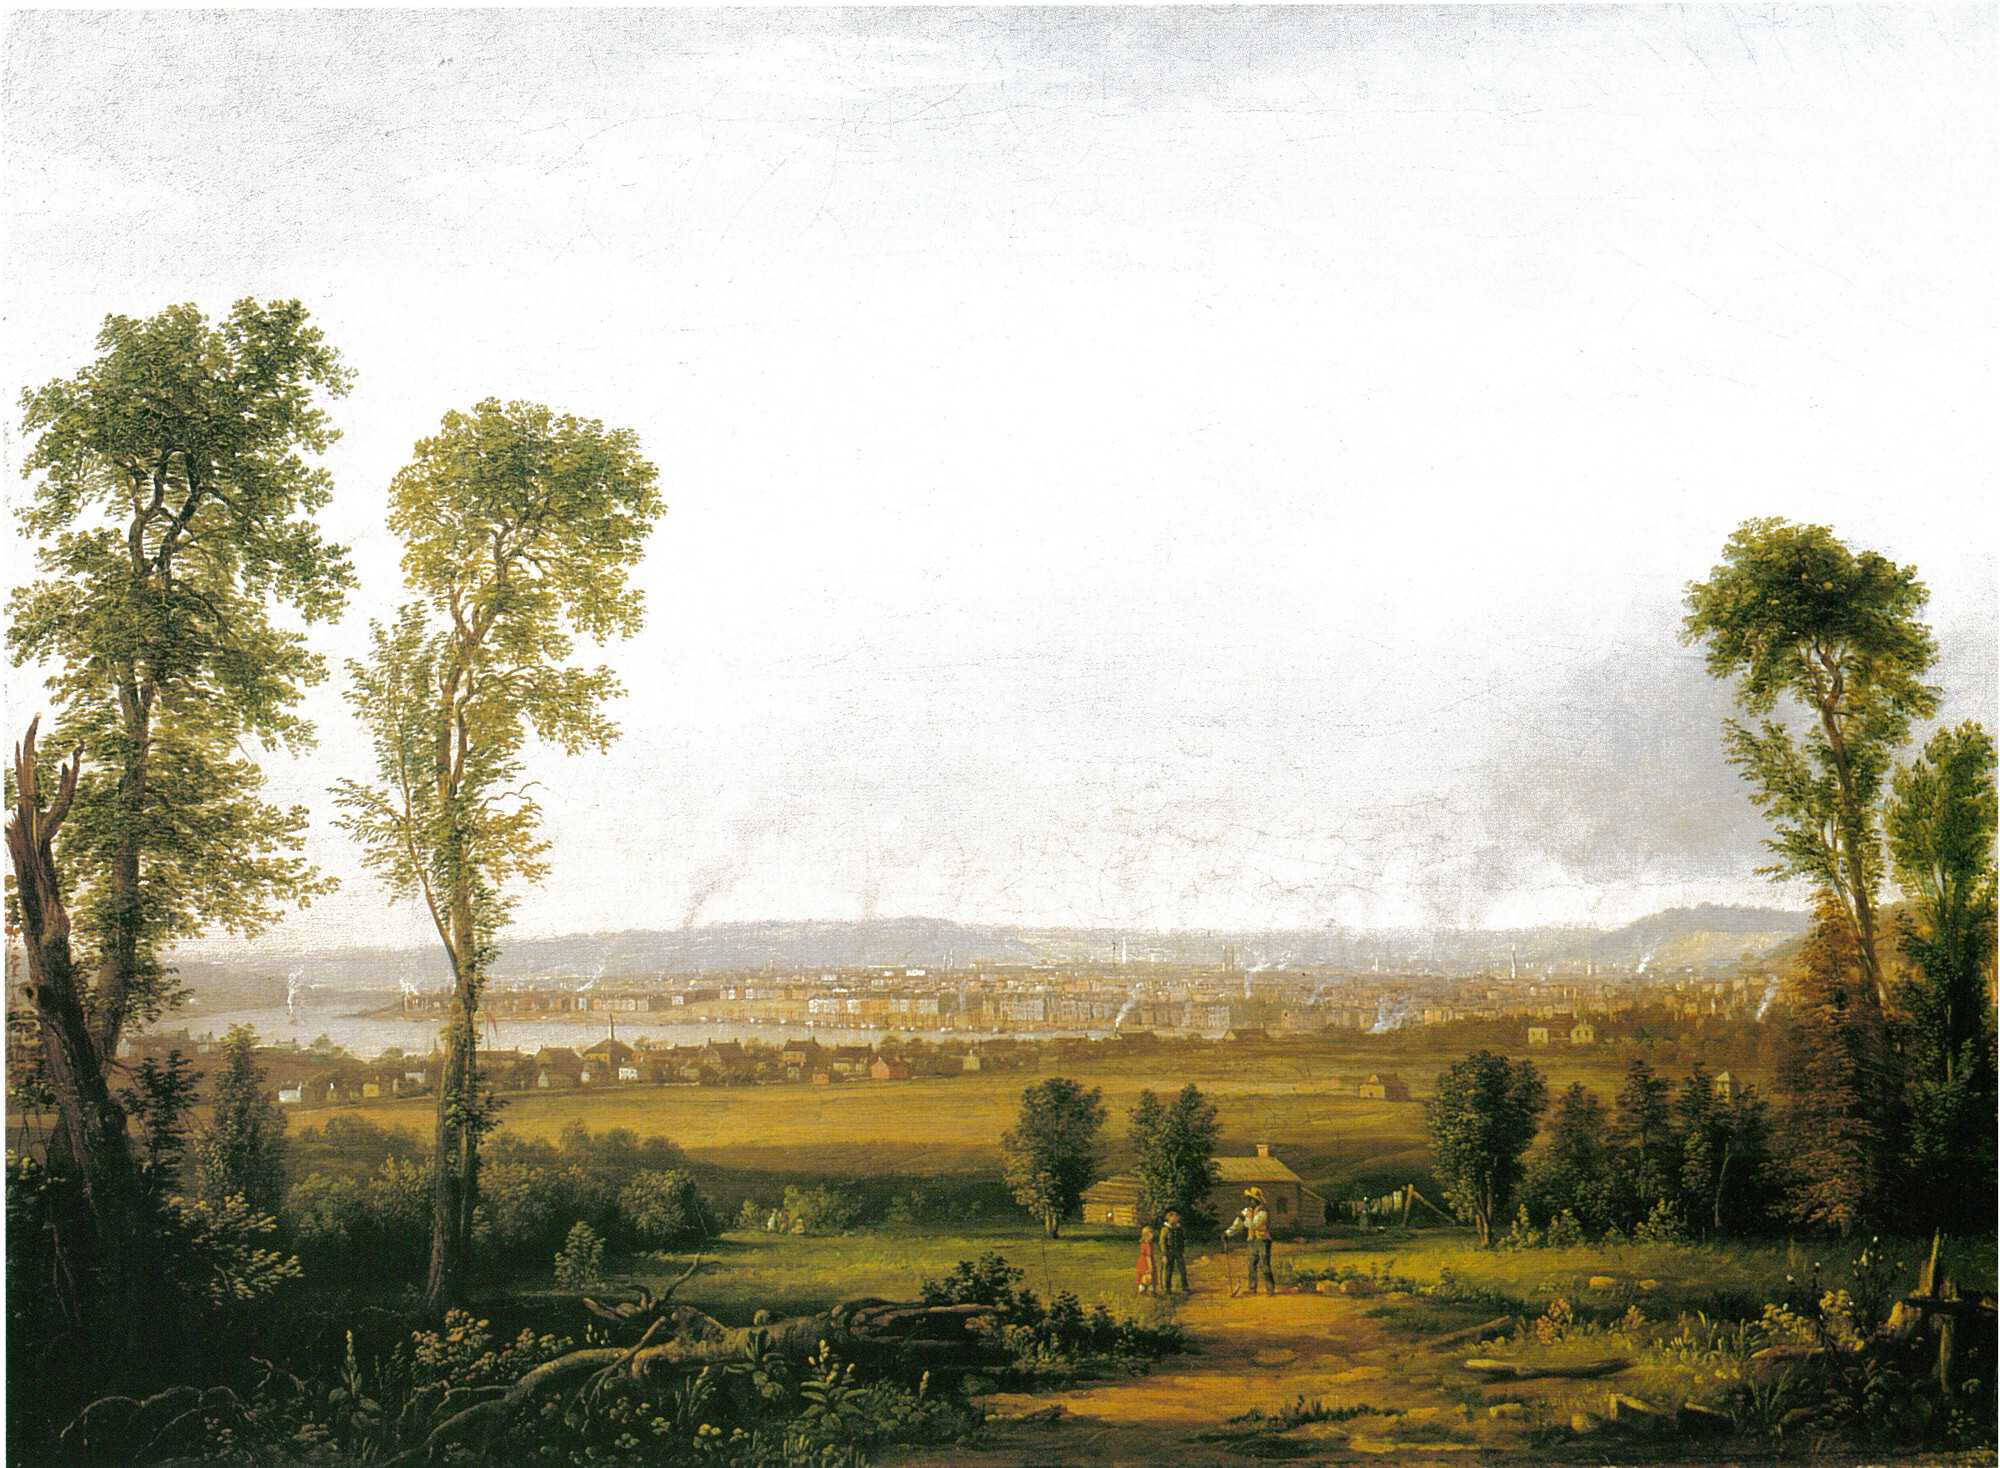 Painting of the view of Cincinnati, Ohio